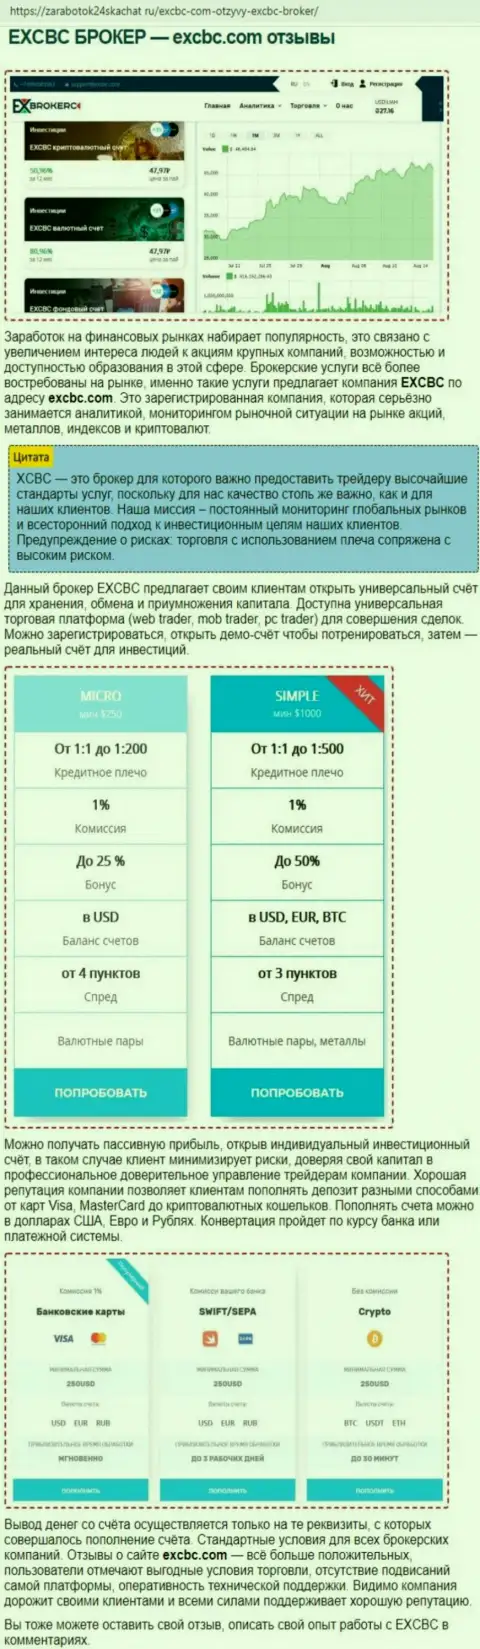 Инфа об форекс брокере EXBrokerc в обзорной статье на web-ресурсе Zarabotok24Skachat Ru